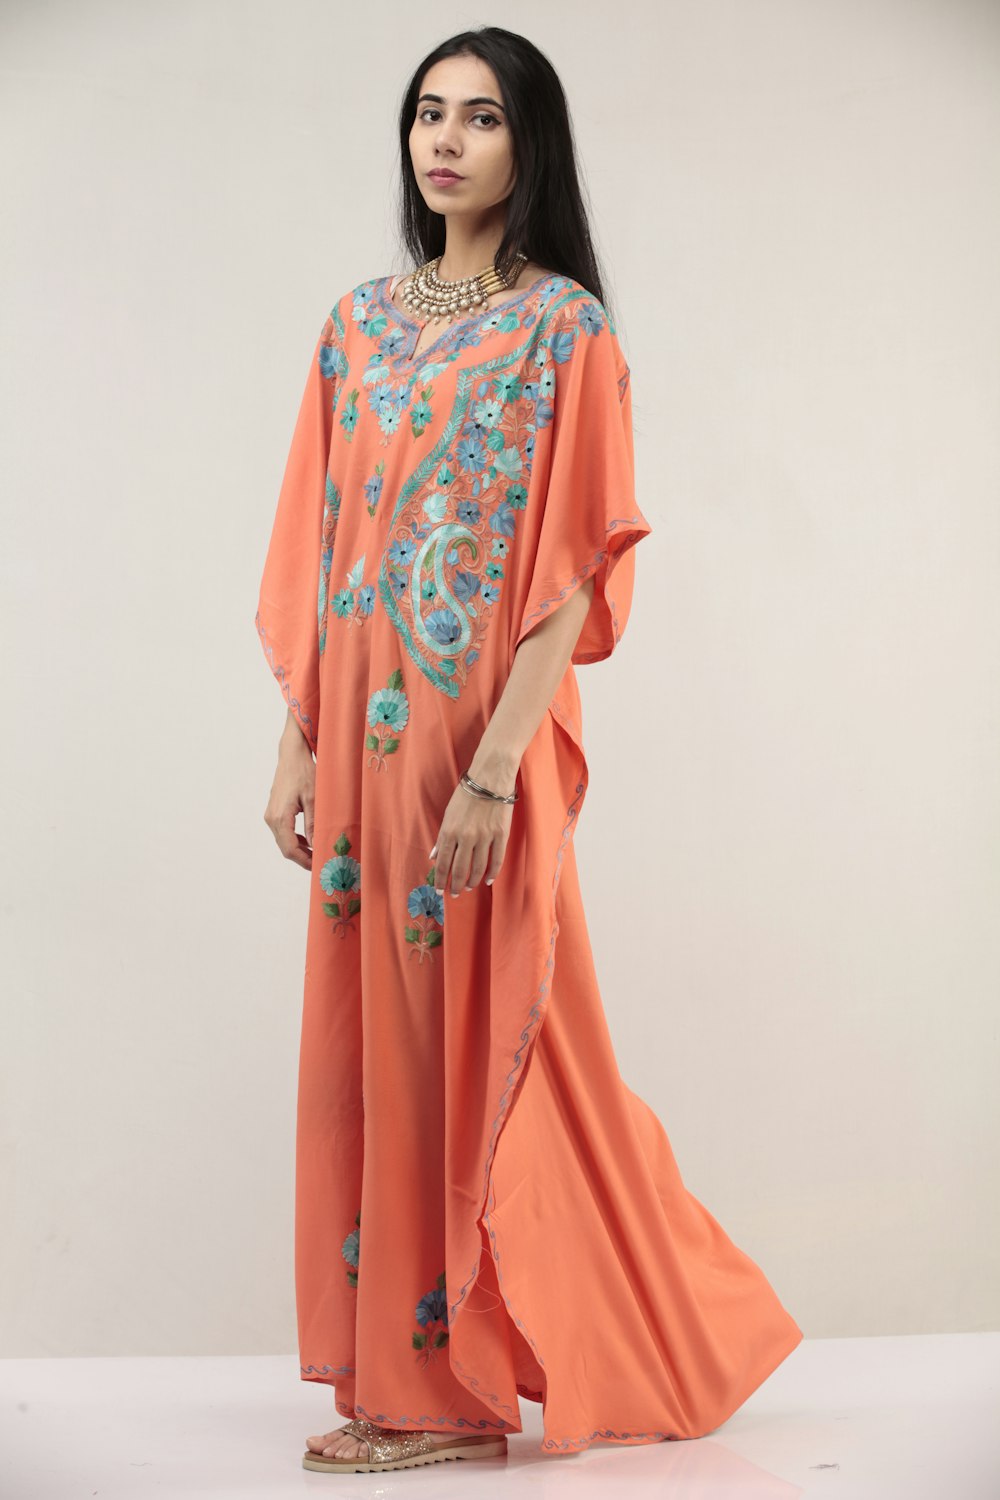 woman in orange and white sari